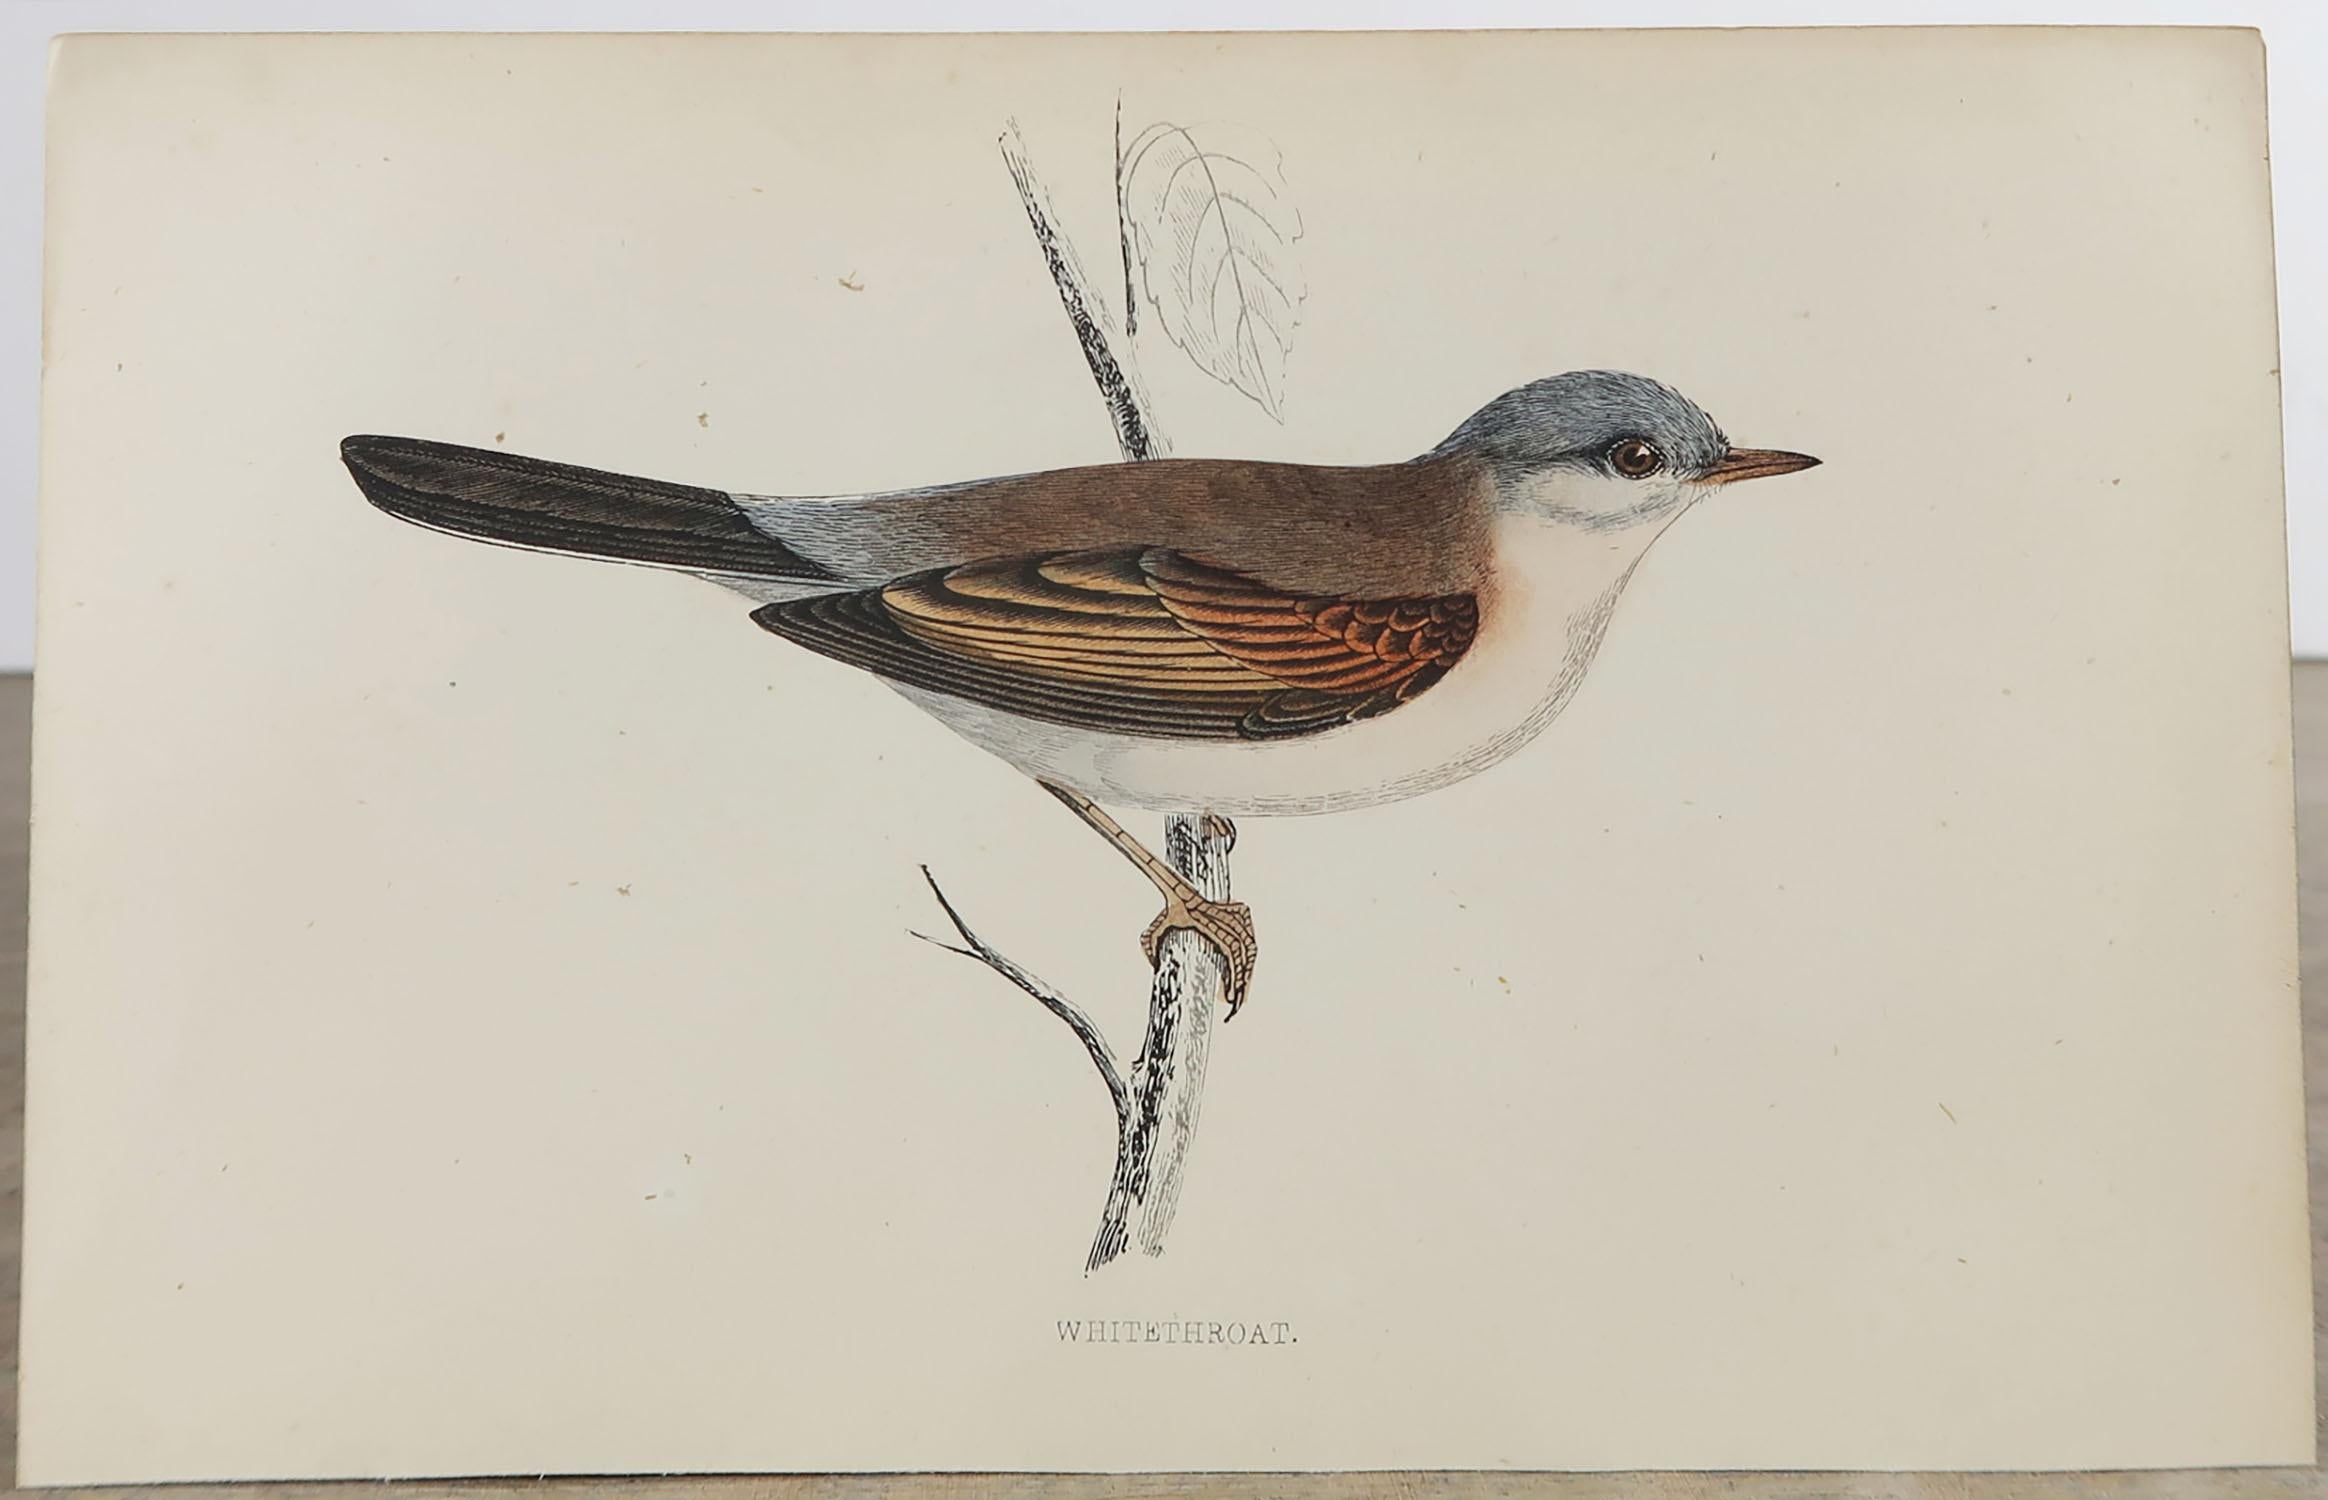 Folk Art Original Antique Bird Print, the Whitethroat, circa 1870